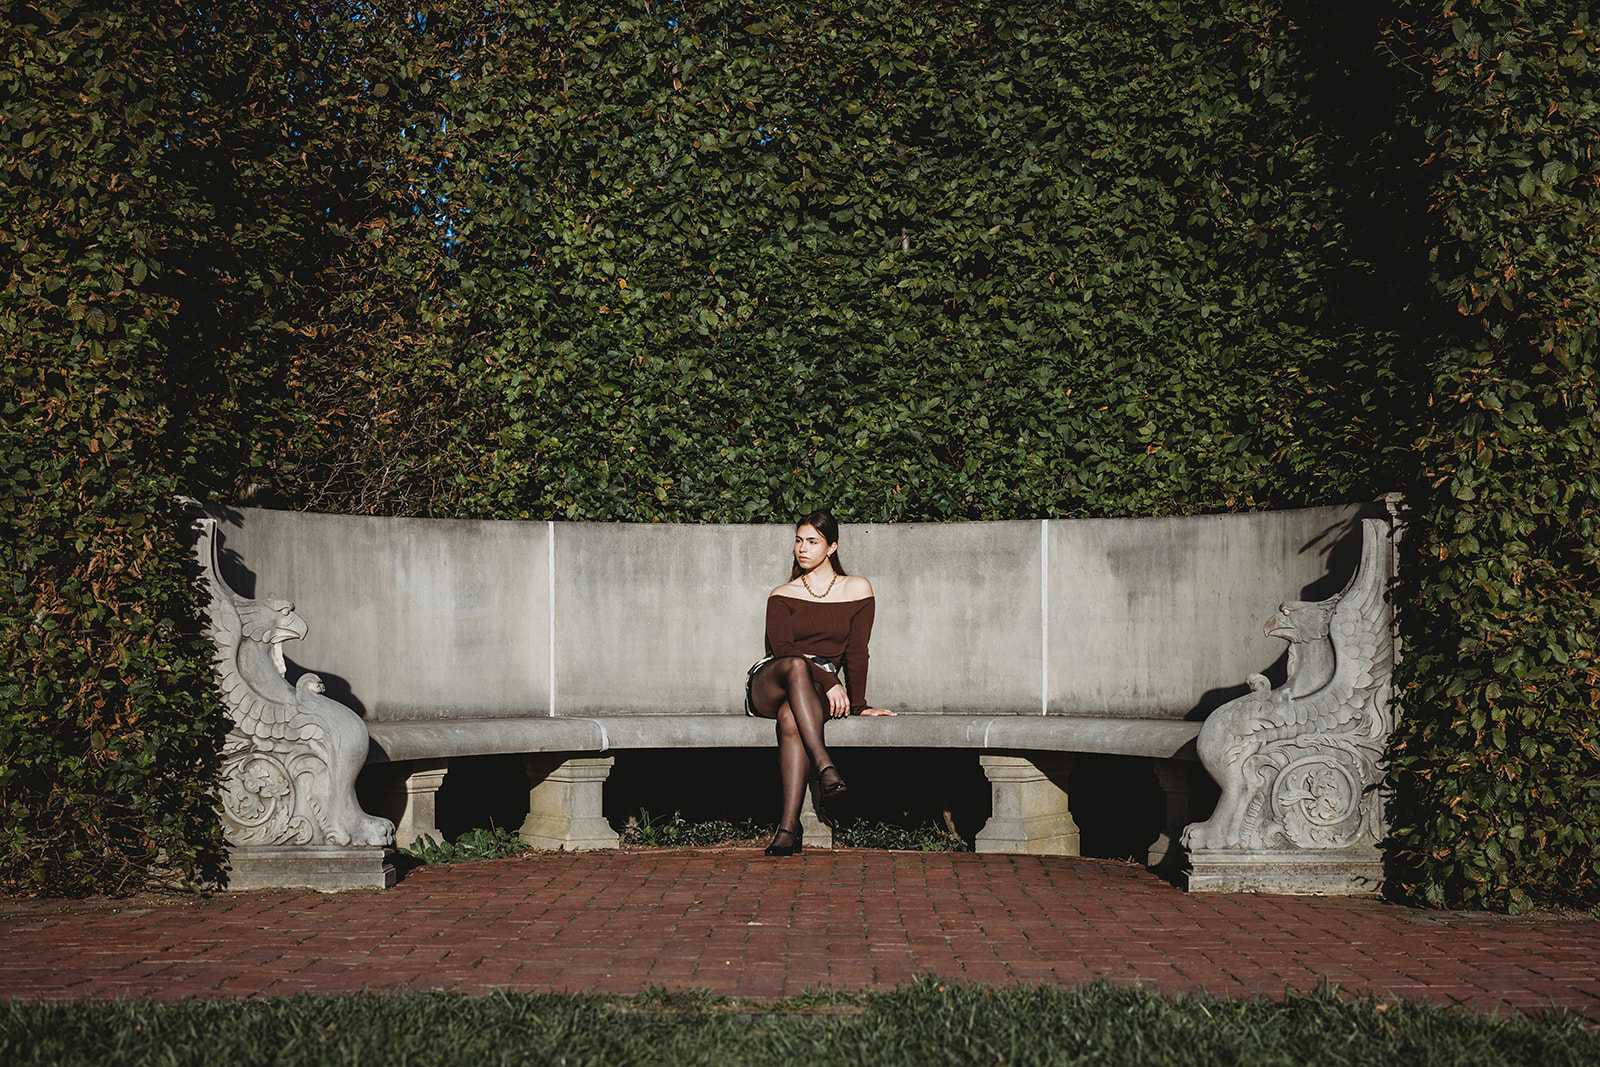 Longwood Gardens fall high school senior portrait session photoshoot fountains fashion model